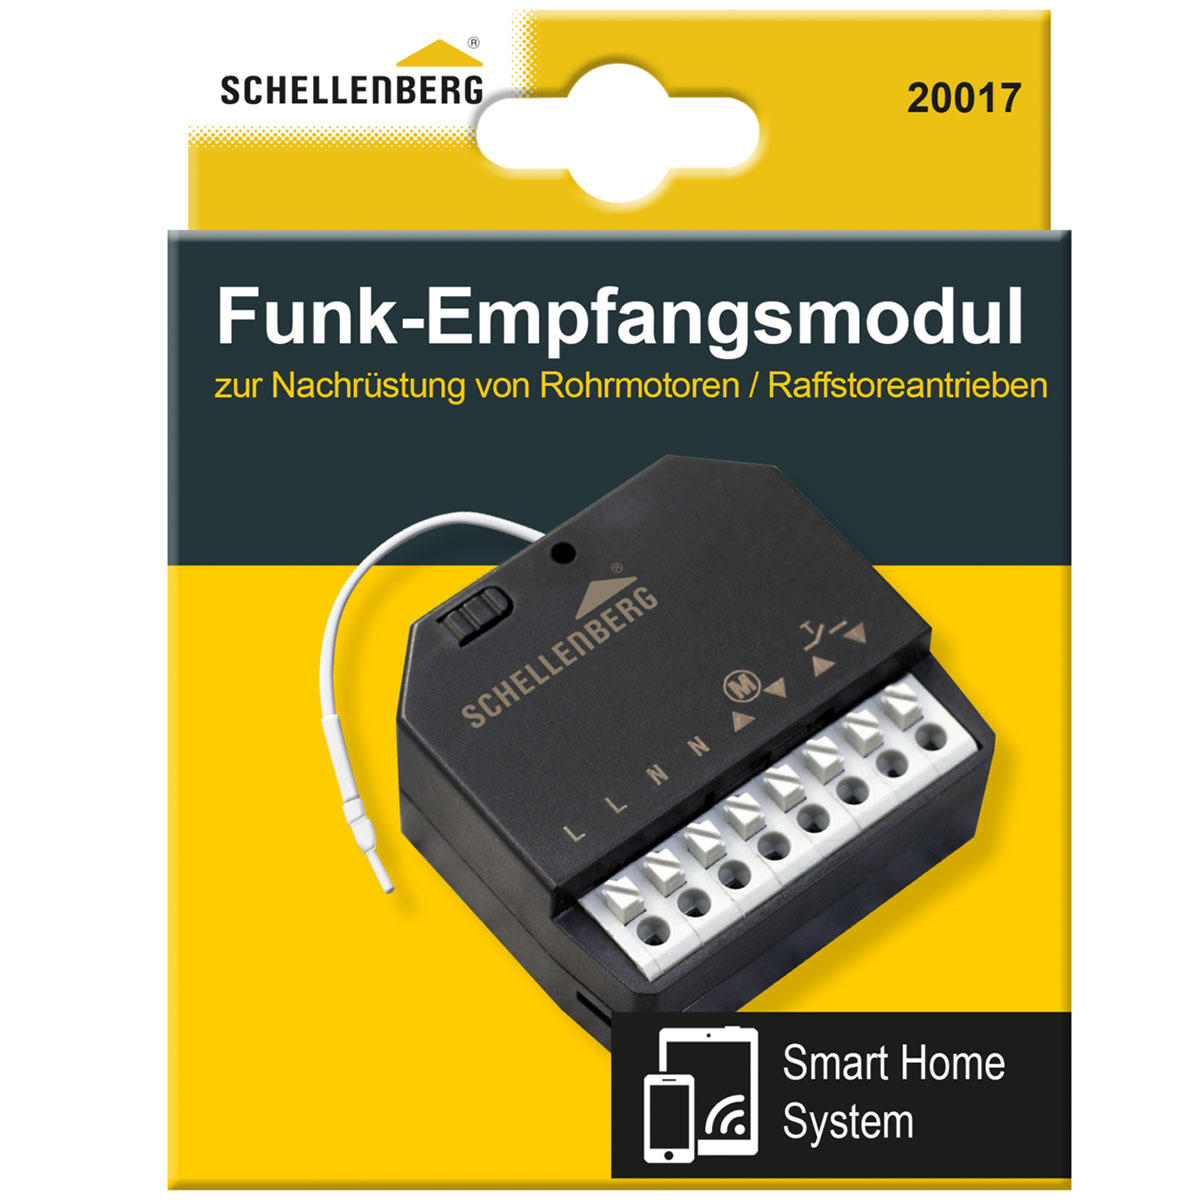 20017-funk-empfangsmodul-verpackung